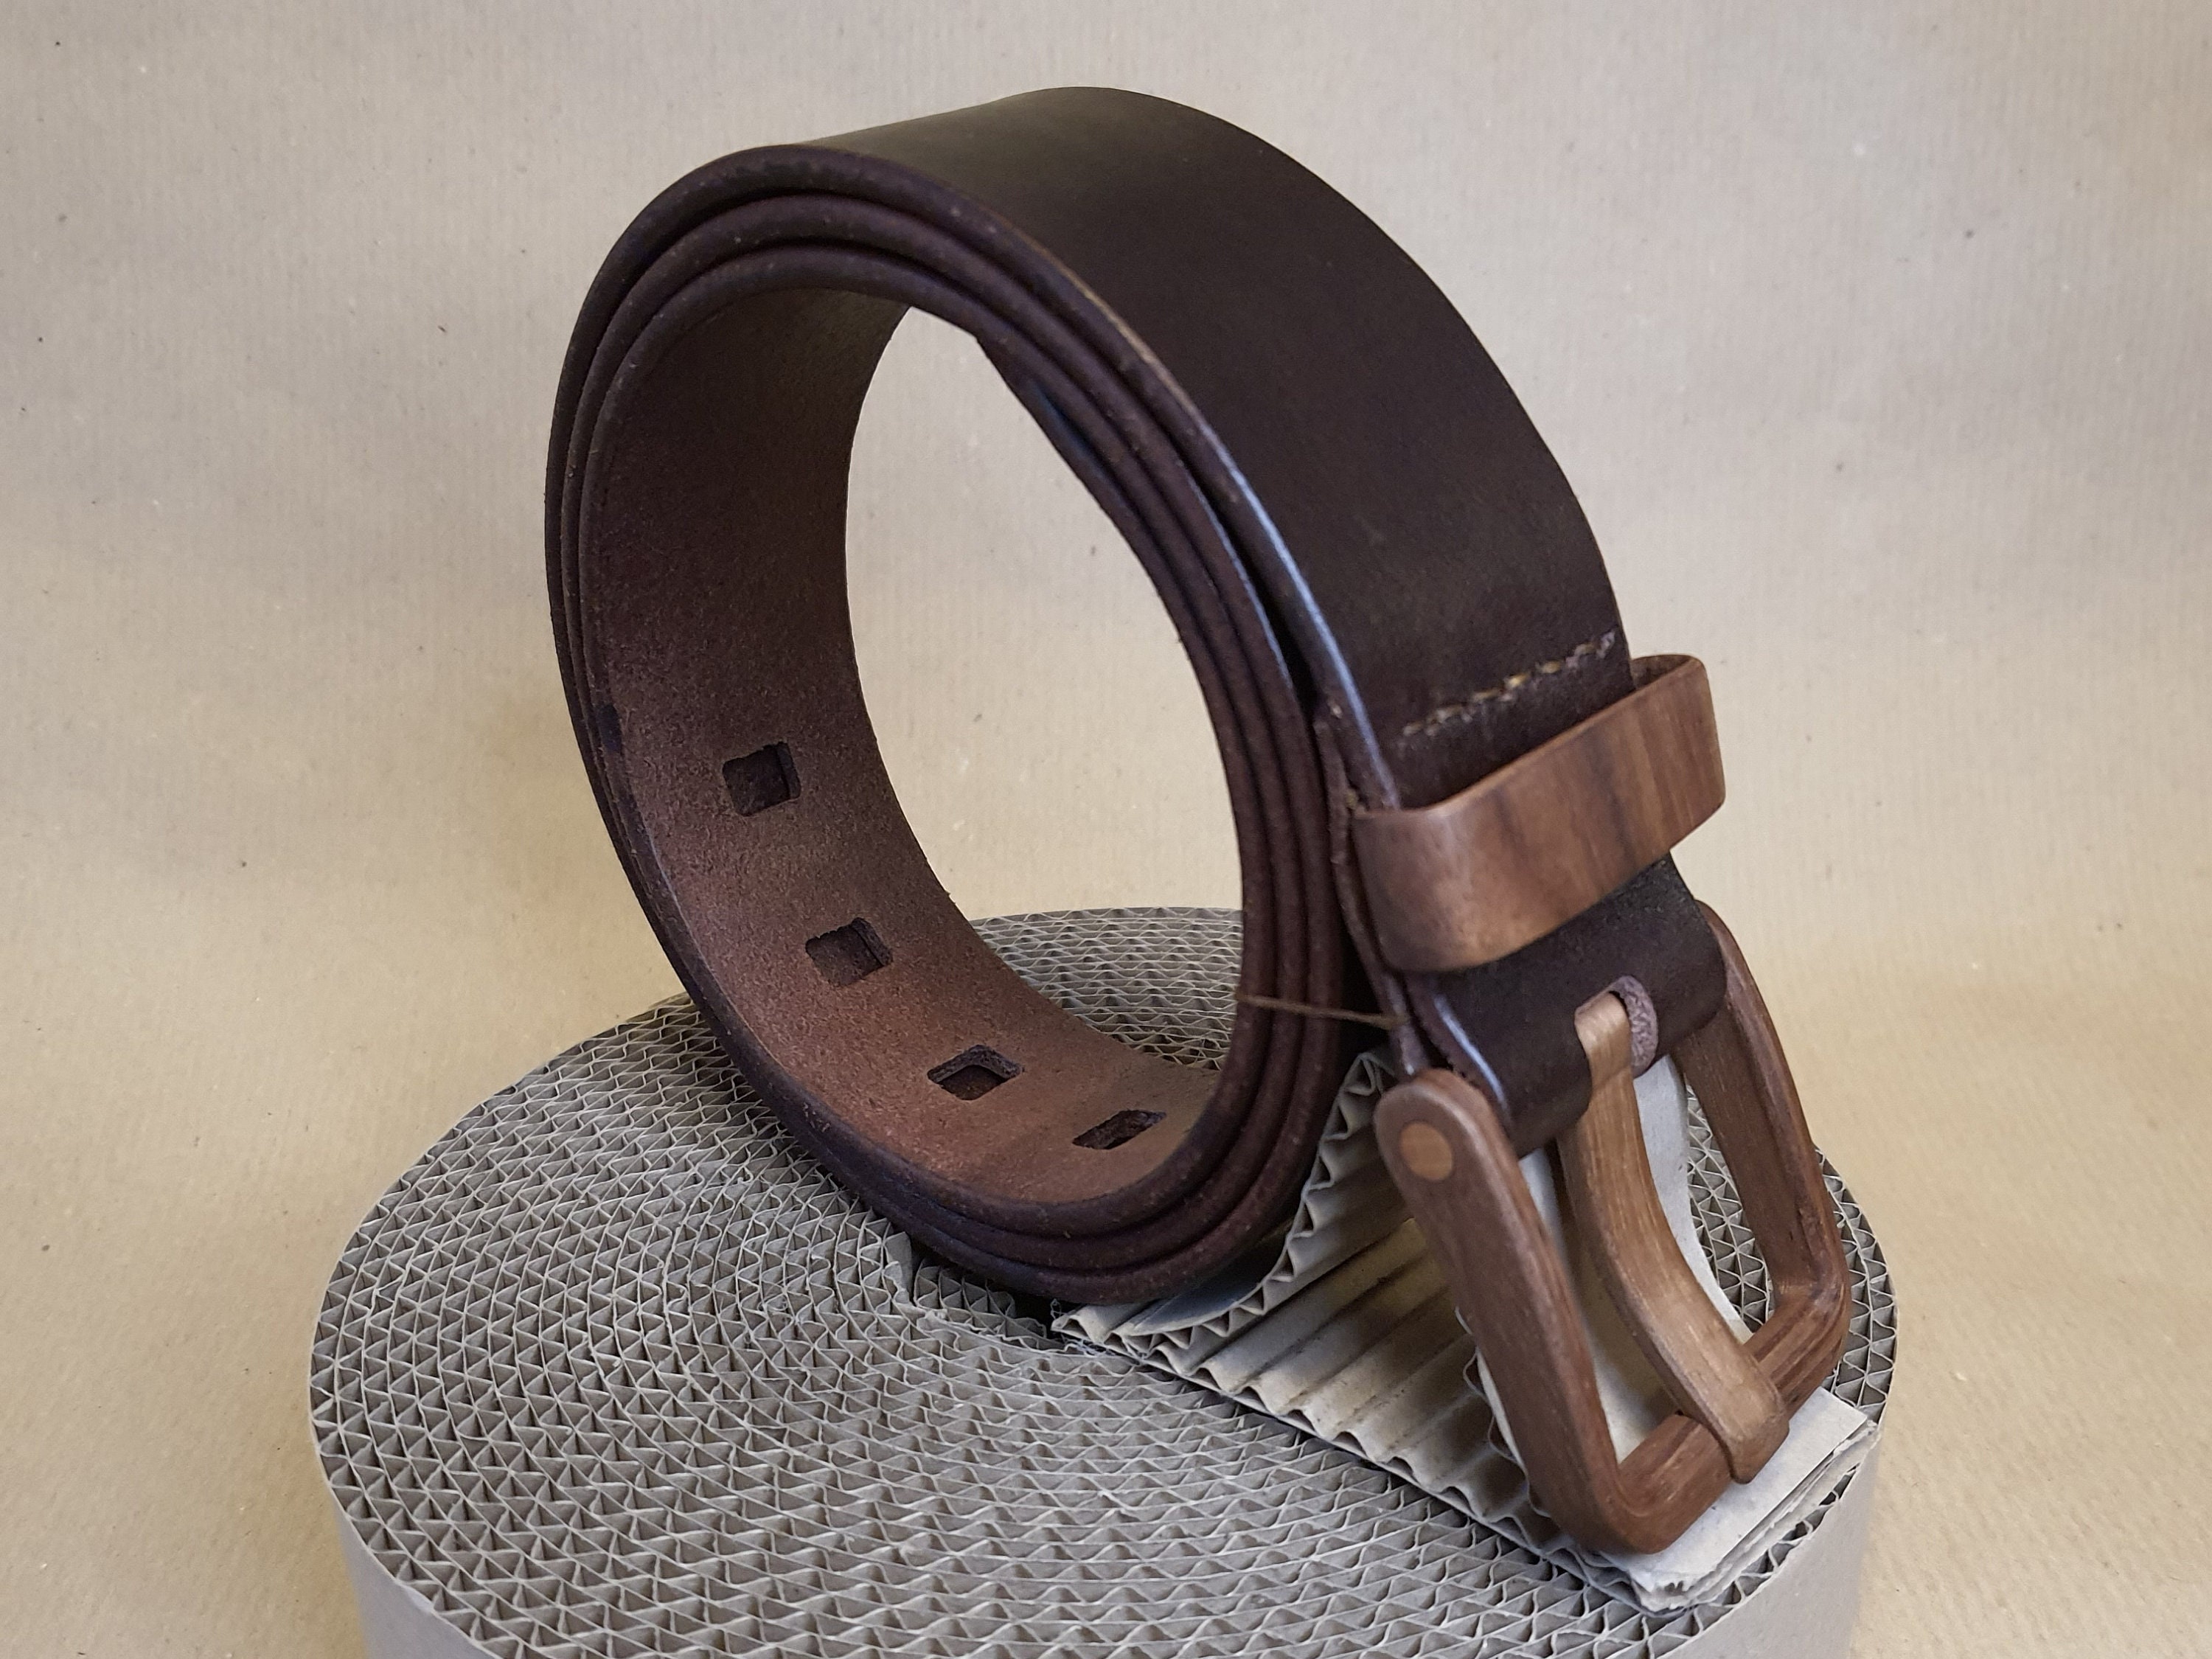 Single Prong Metal Belt Buckle Replacement buckle for belt fits  1-1/4(32mm) Belt Strap-Nickel Plate - Conchos